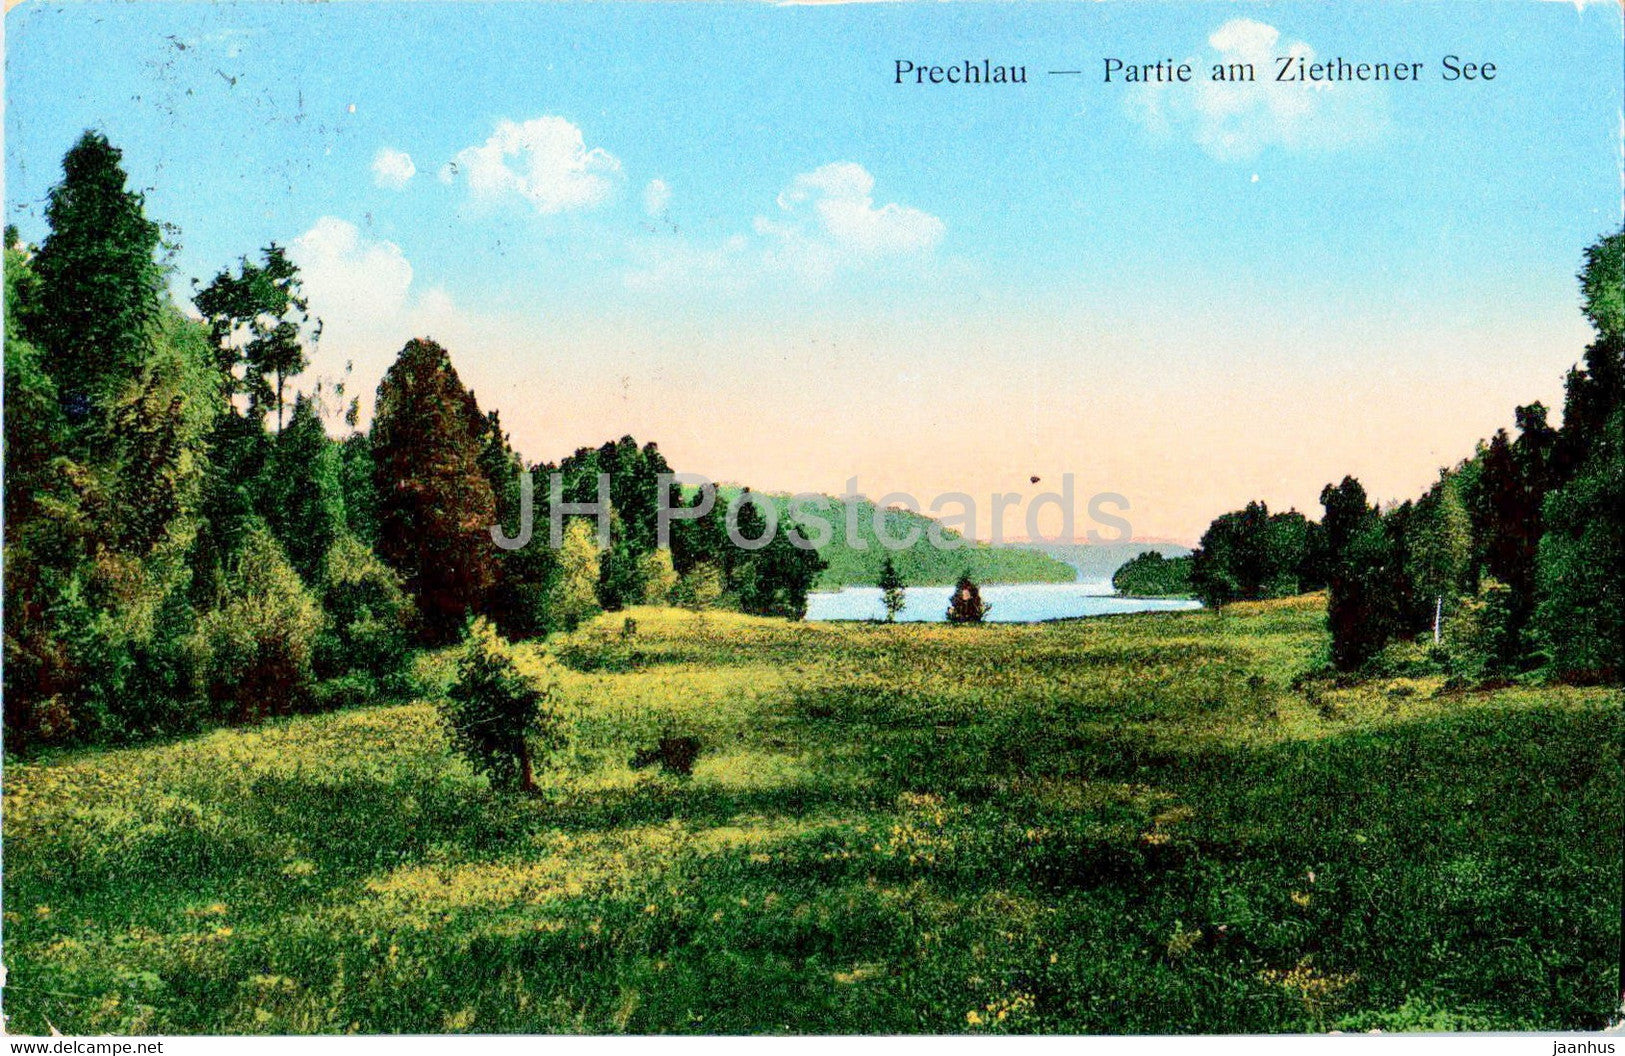 Prechlau - Partie am Ziethener See - old postcard - Poland - used - JH Postcards